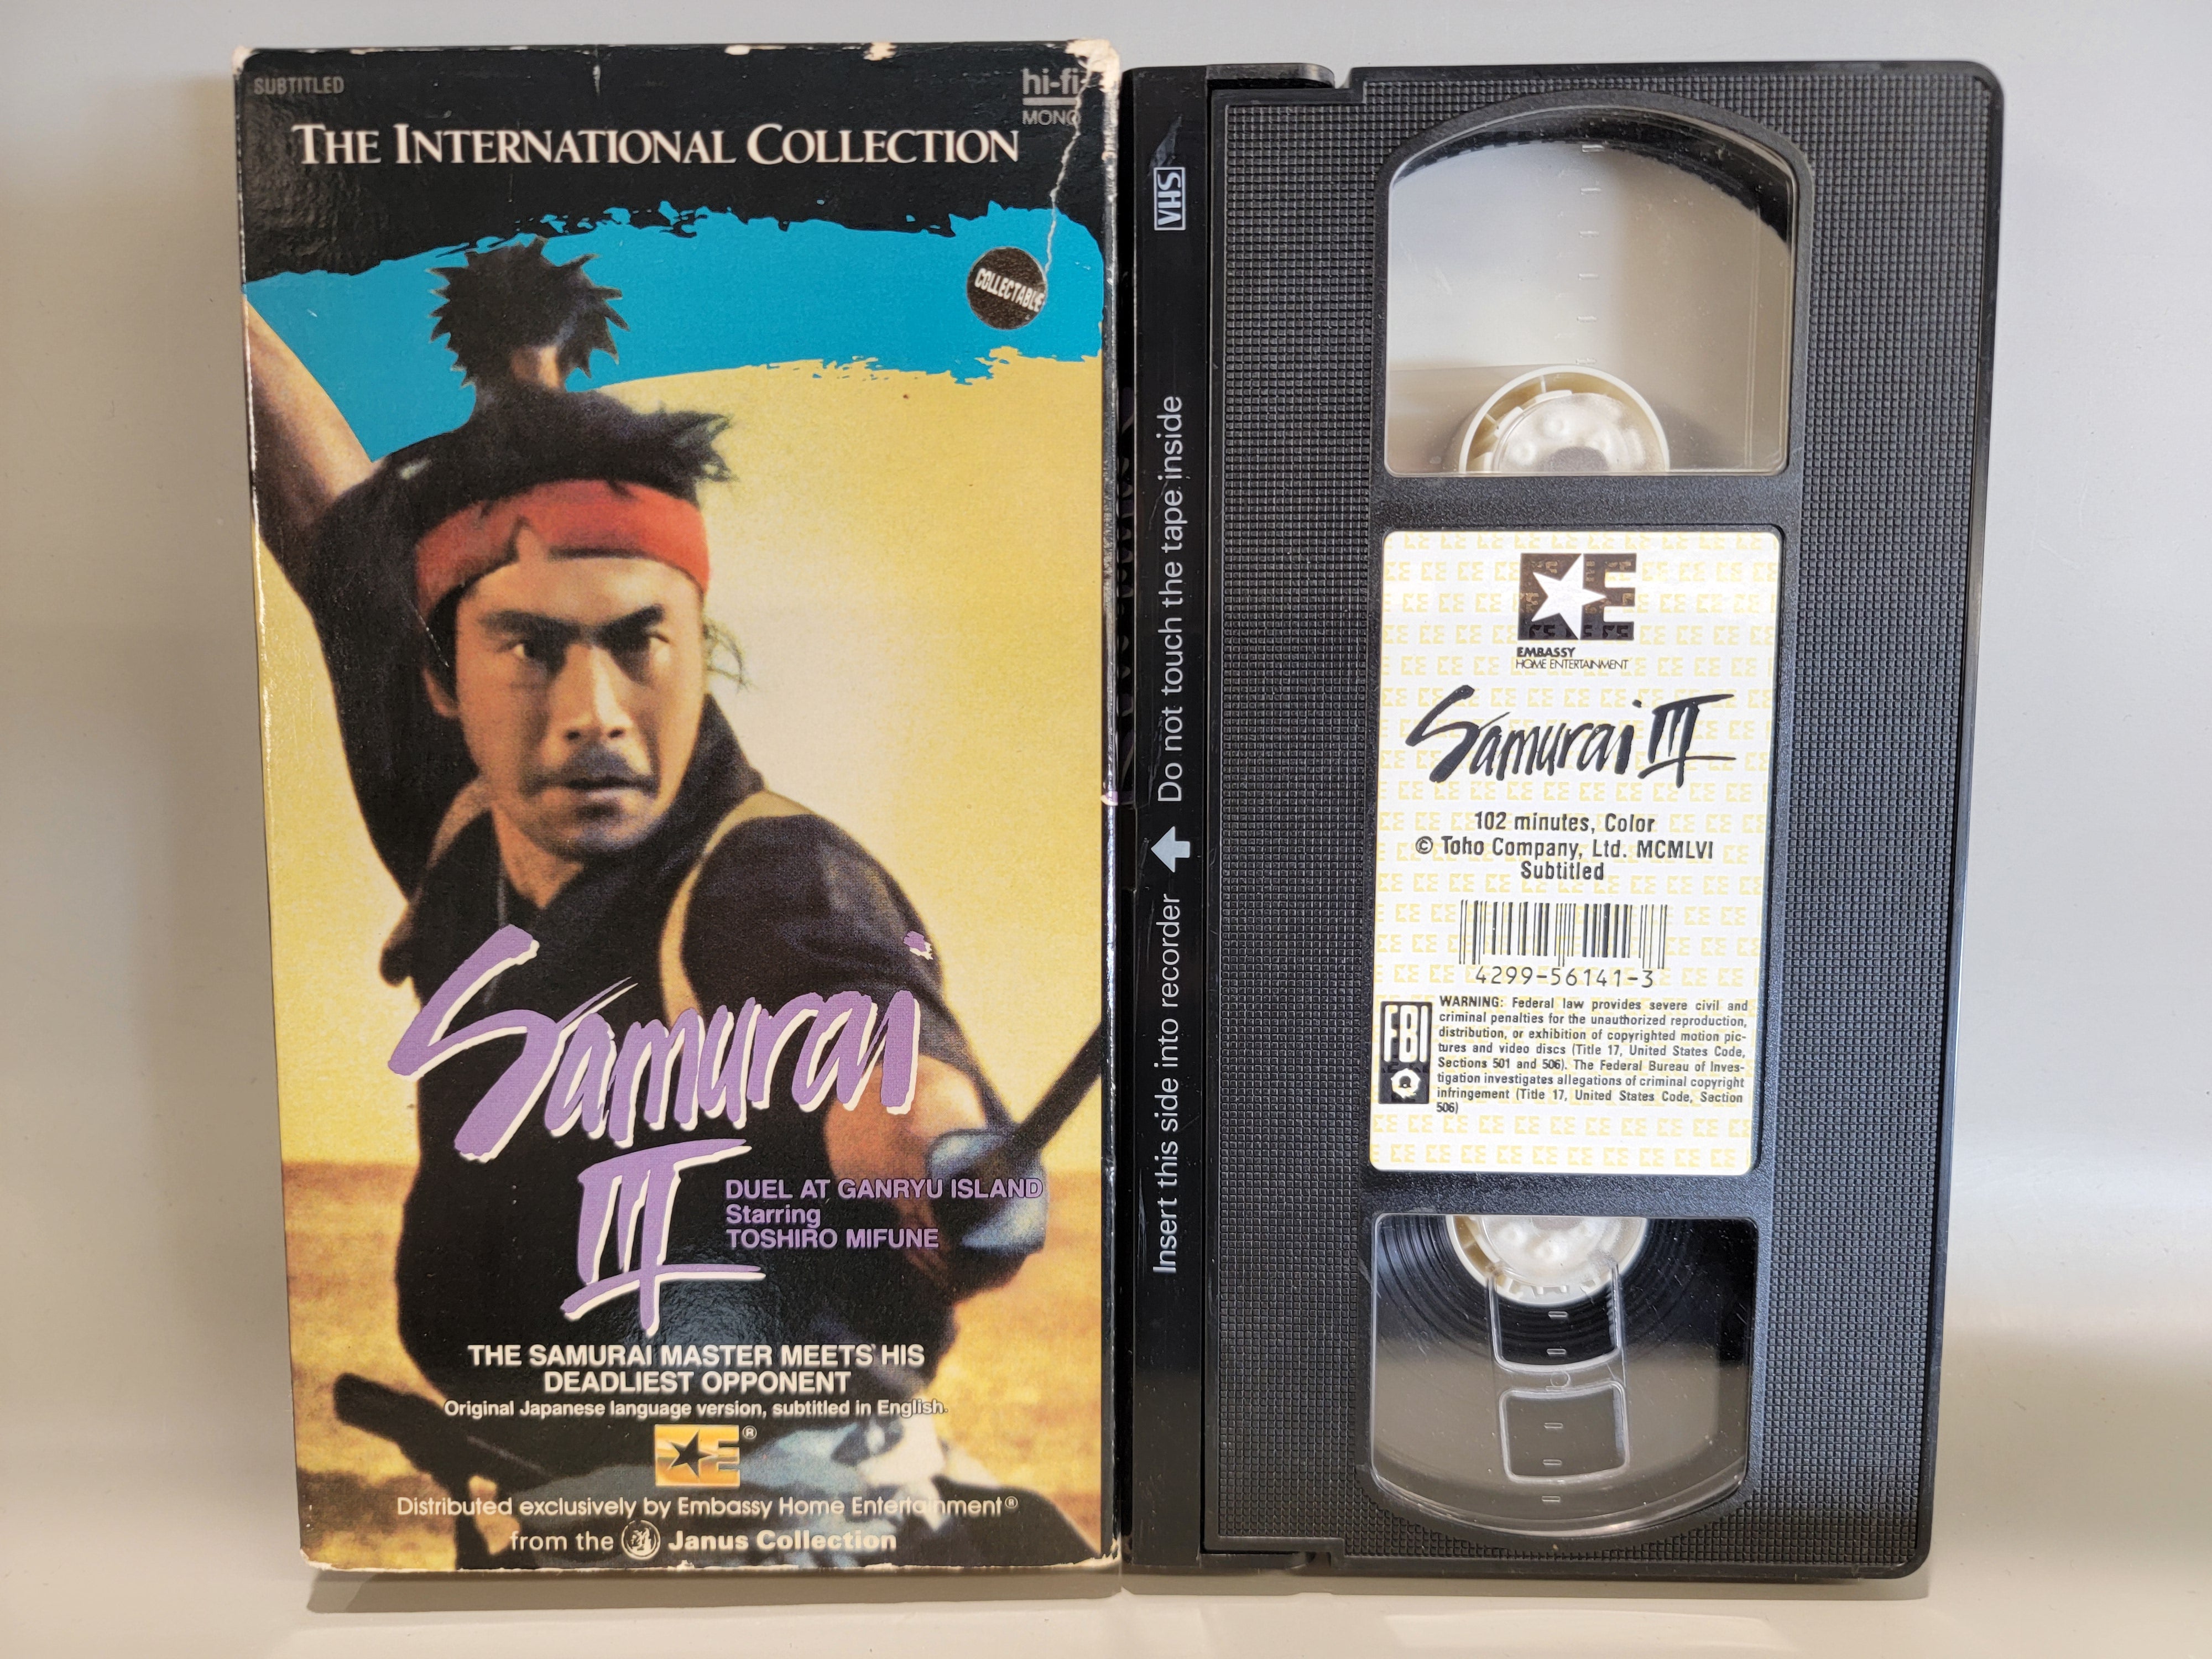 SAMURAI III VHS [USED]